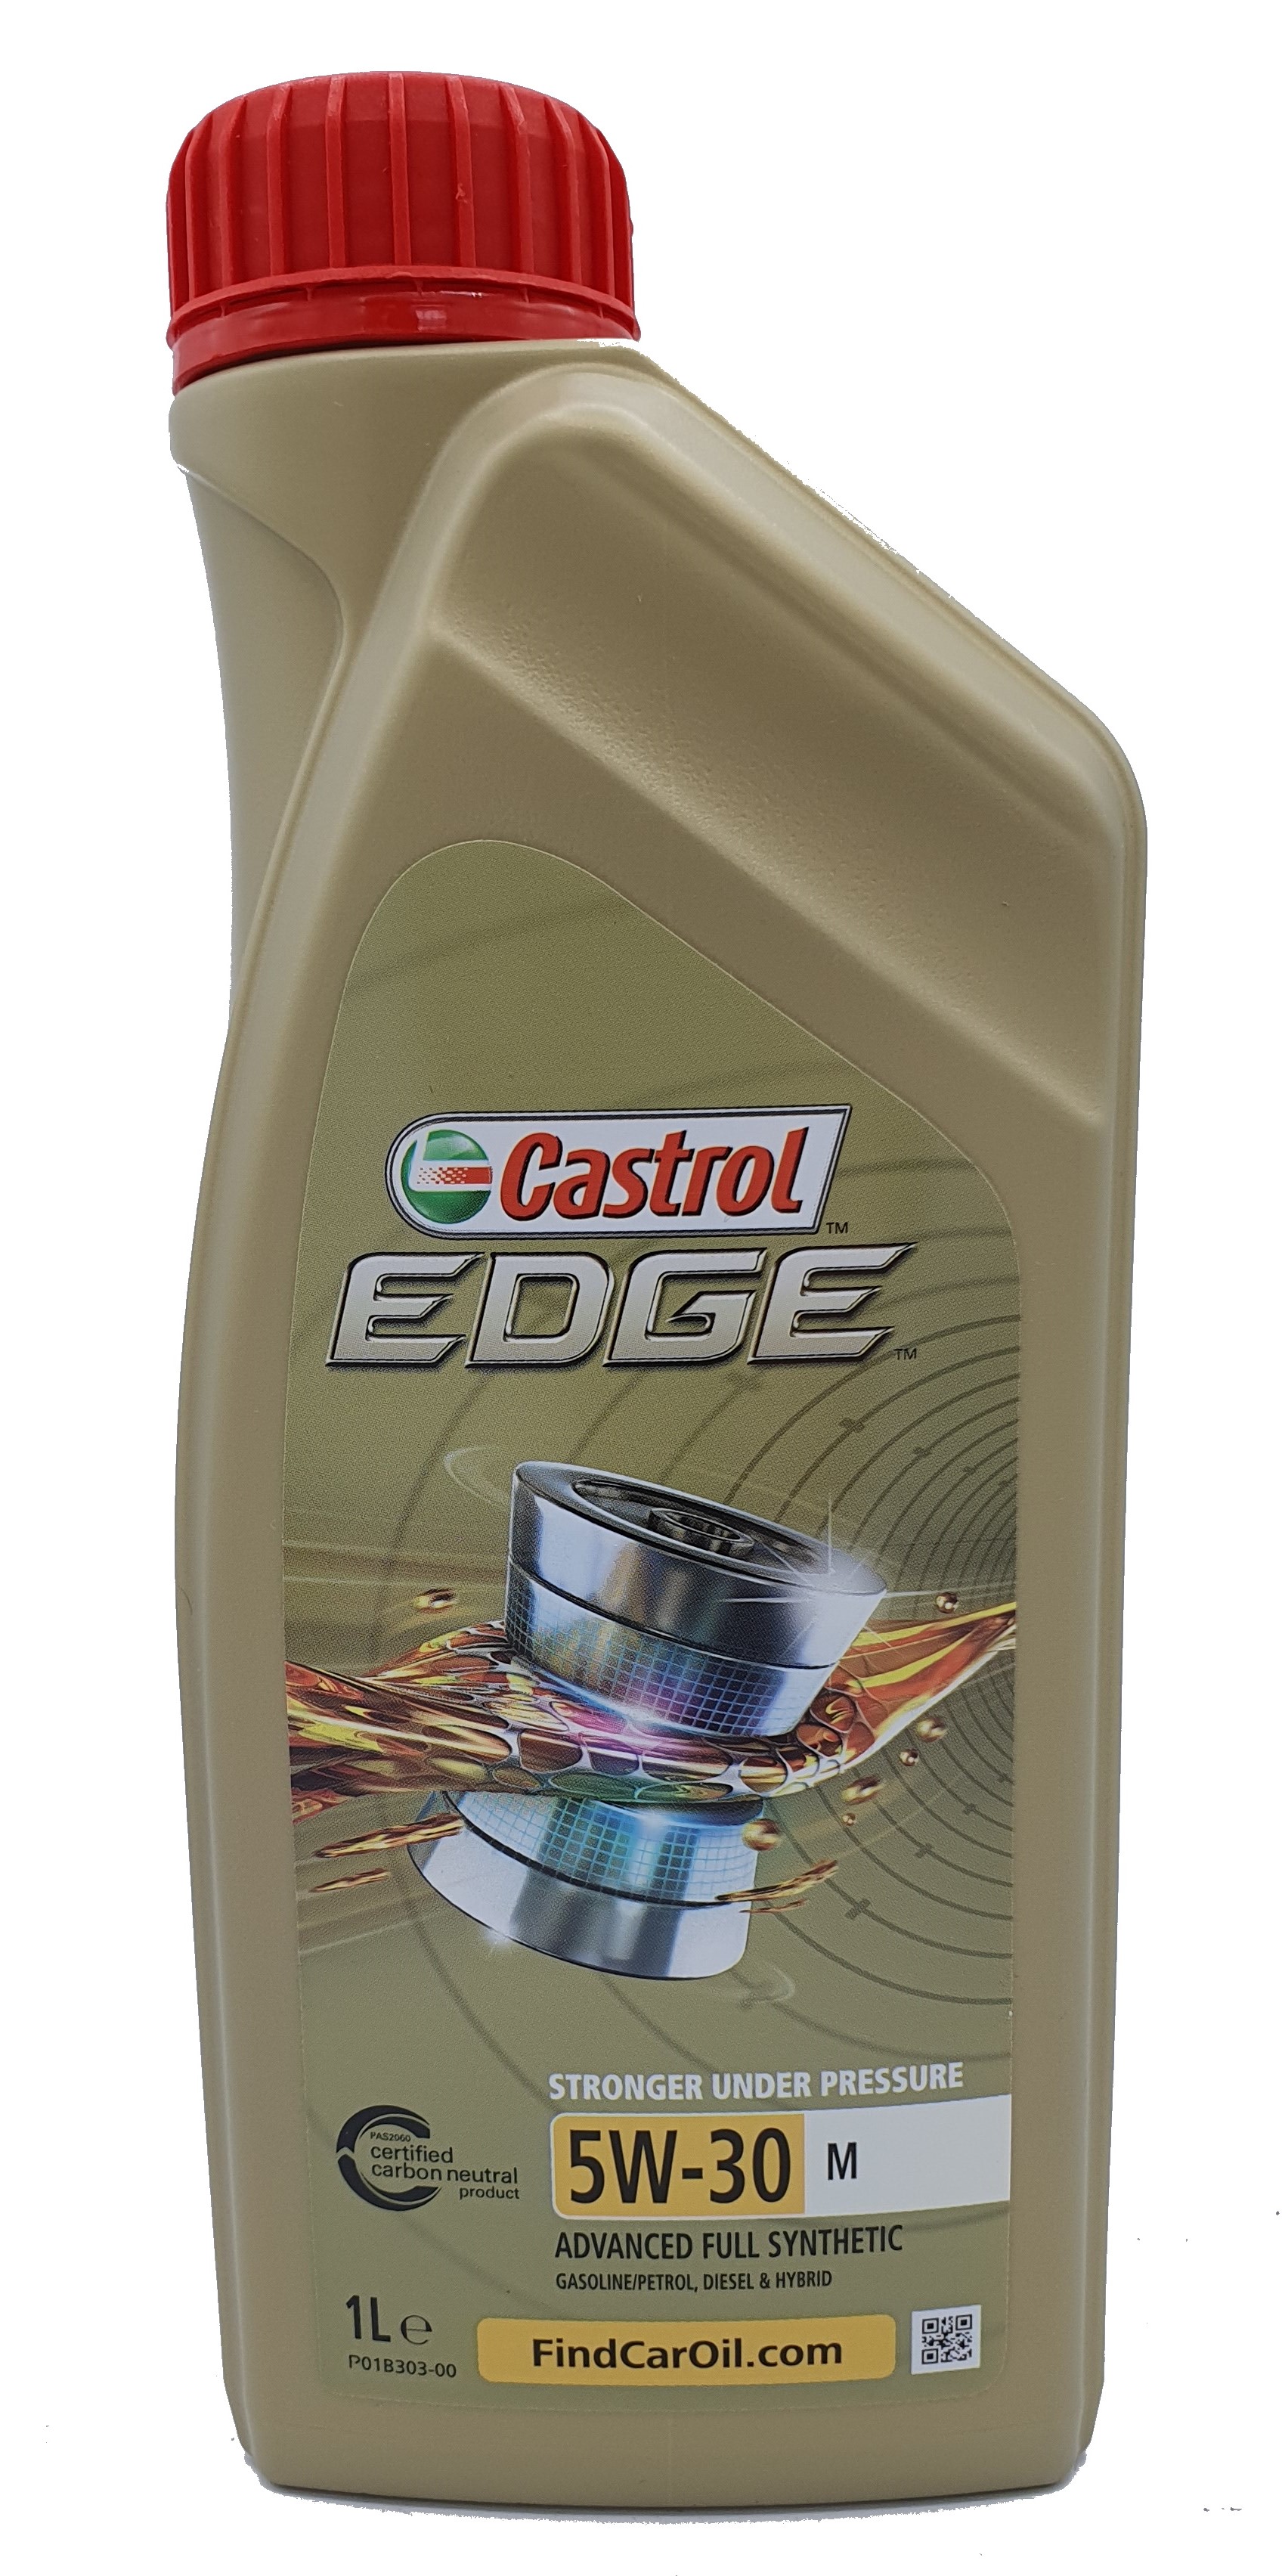 Castrol Edge 5W-30 M 3x1 Liter